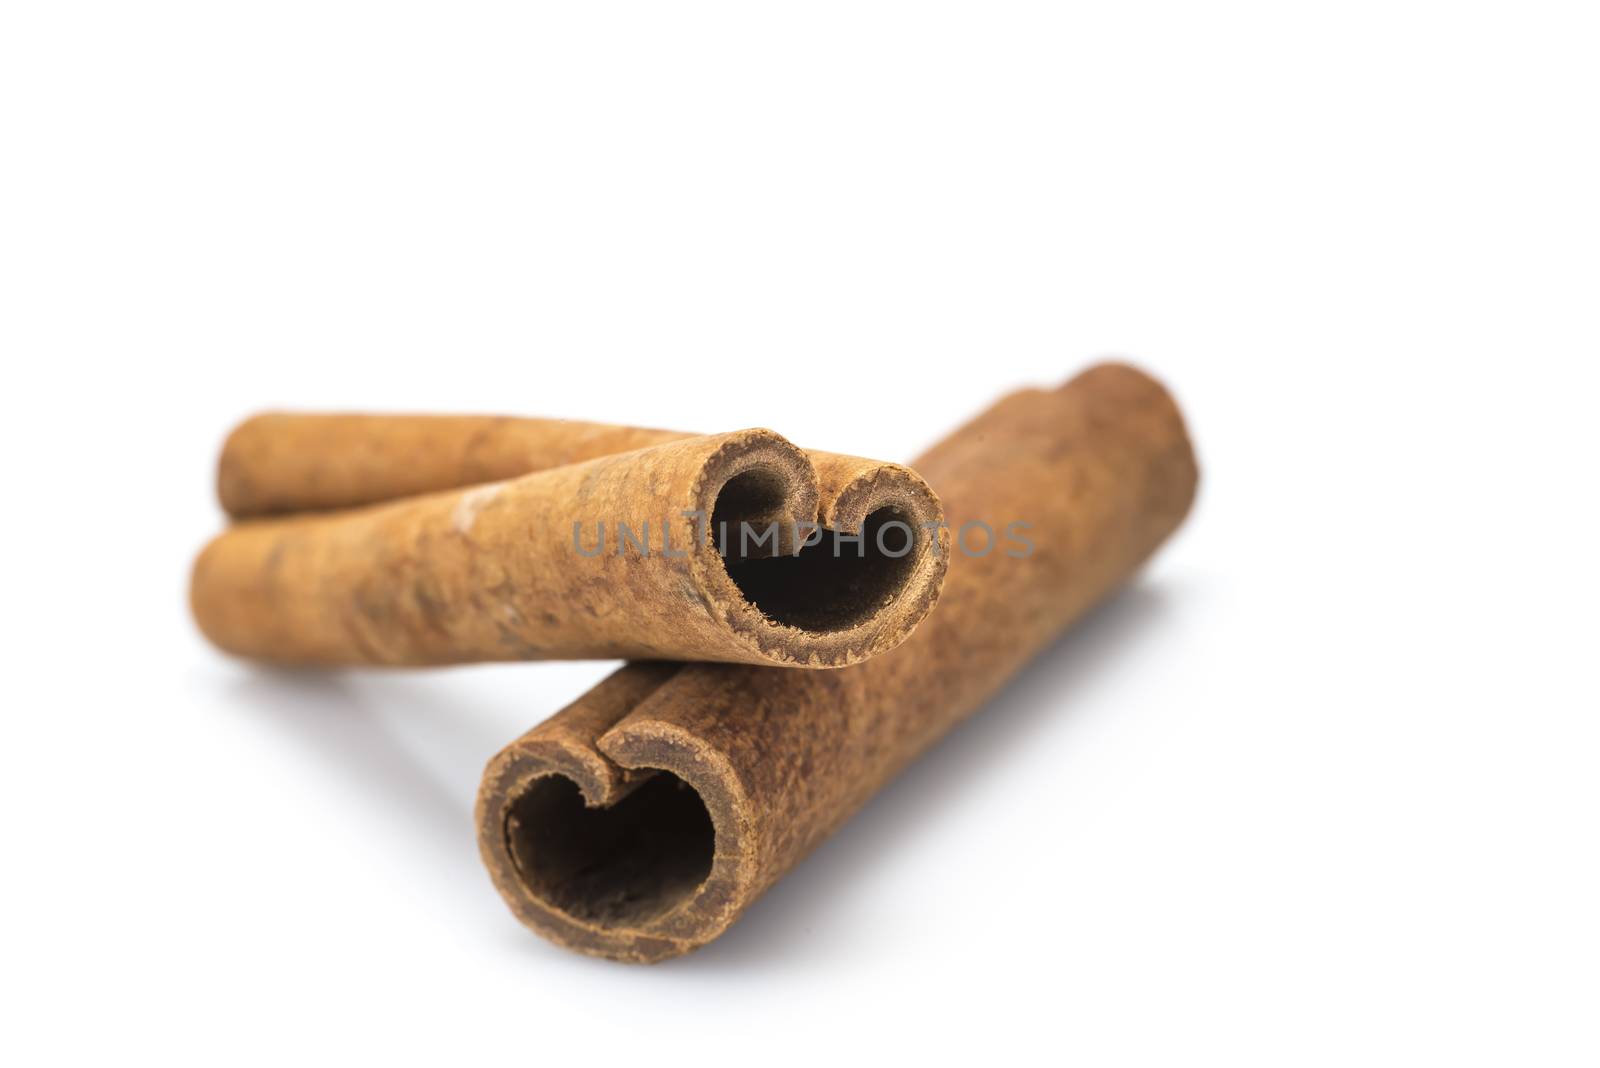 Cinnamon sticks by angelsimon